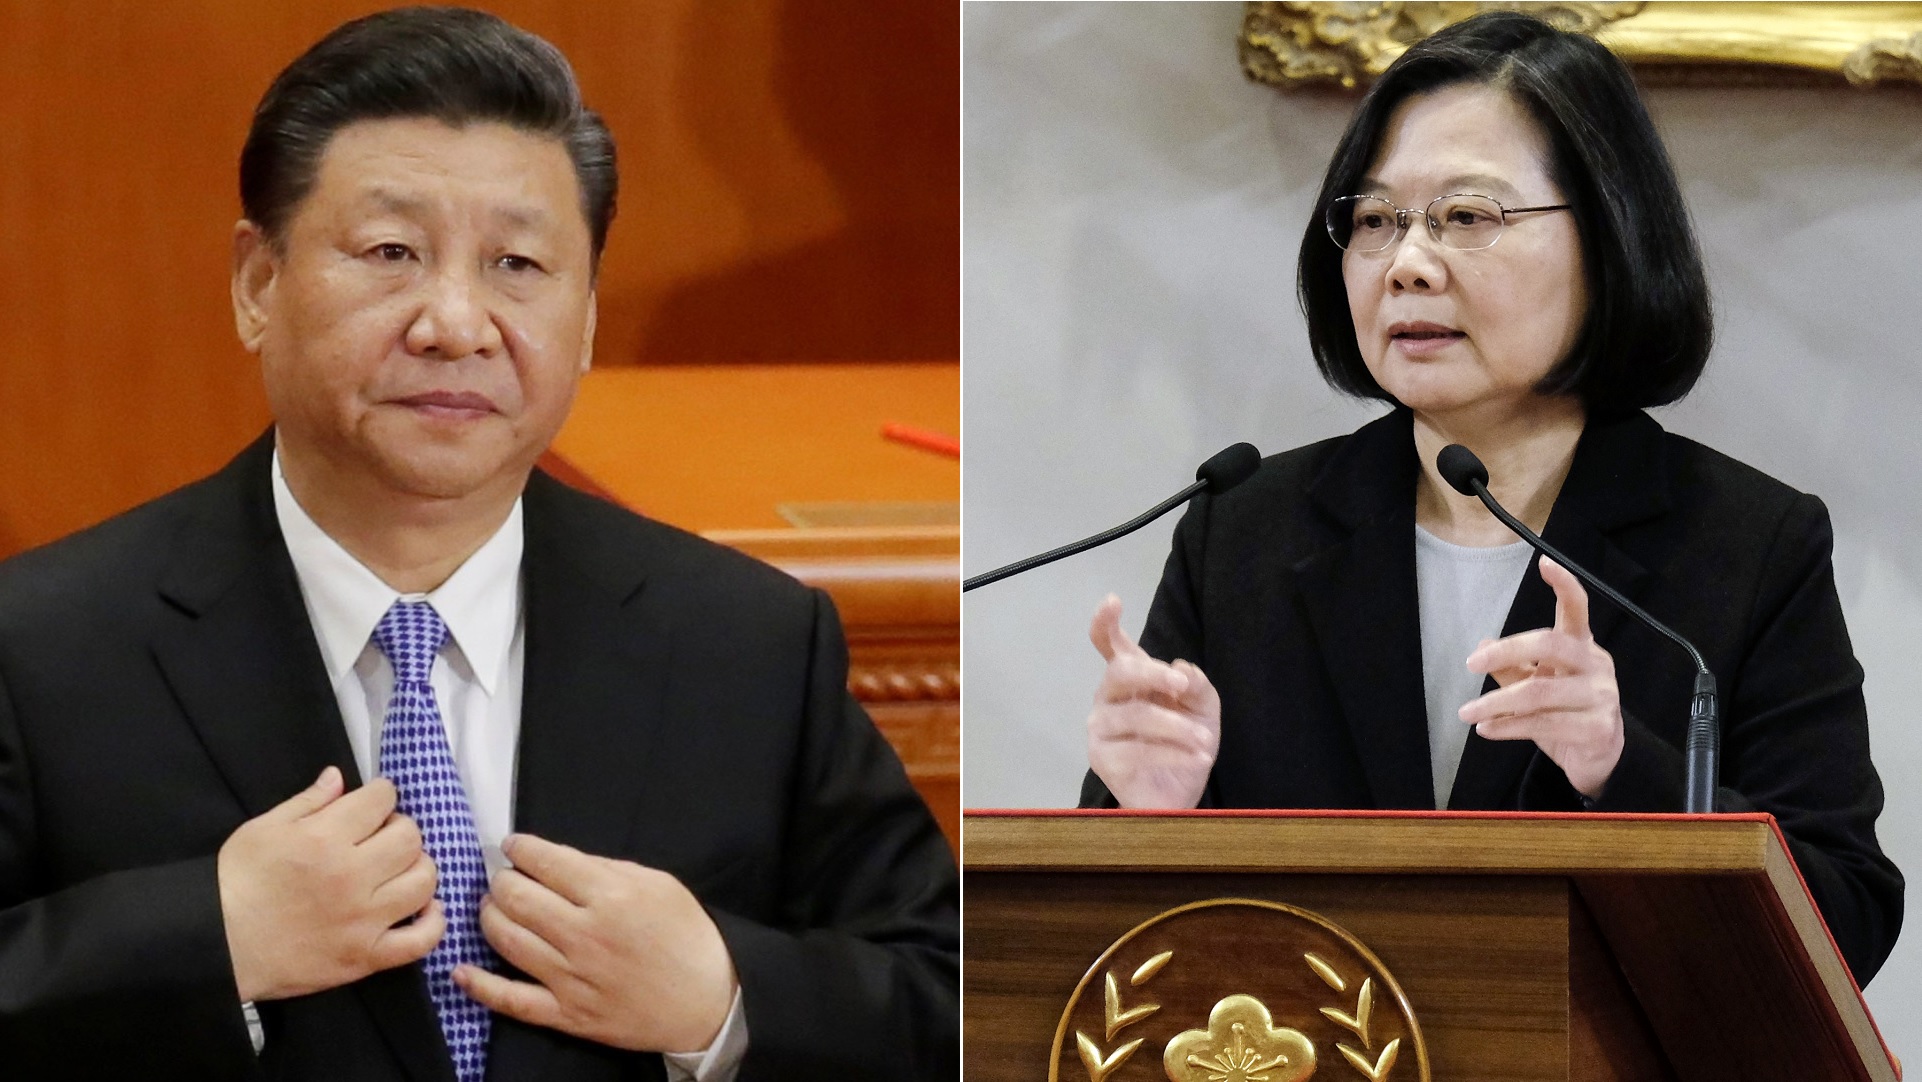 Los presidentes Xi Jinping (China) y su par taiwanesa Tsai Ing-wen